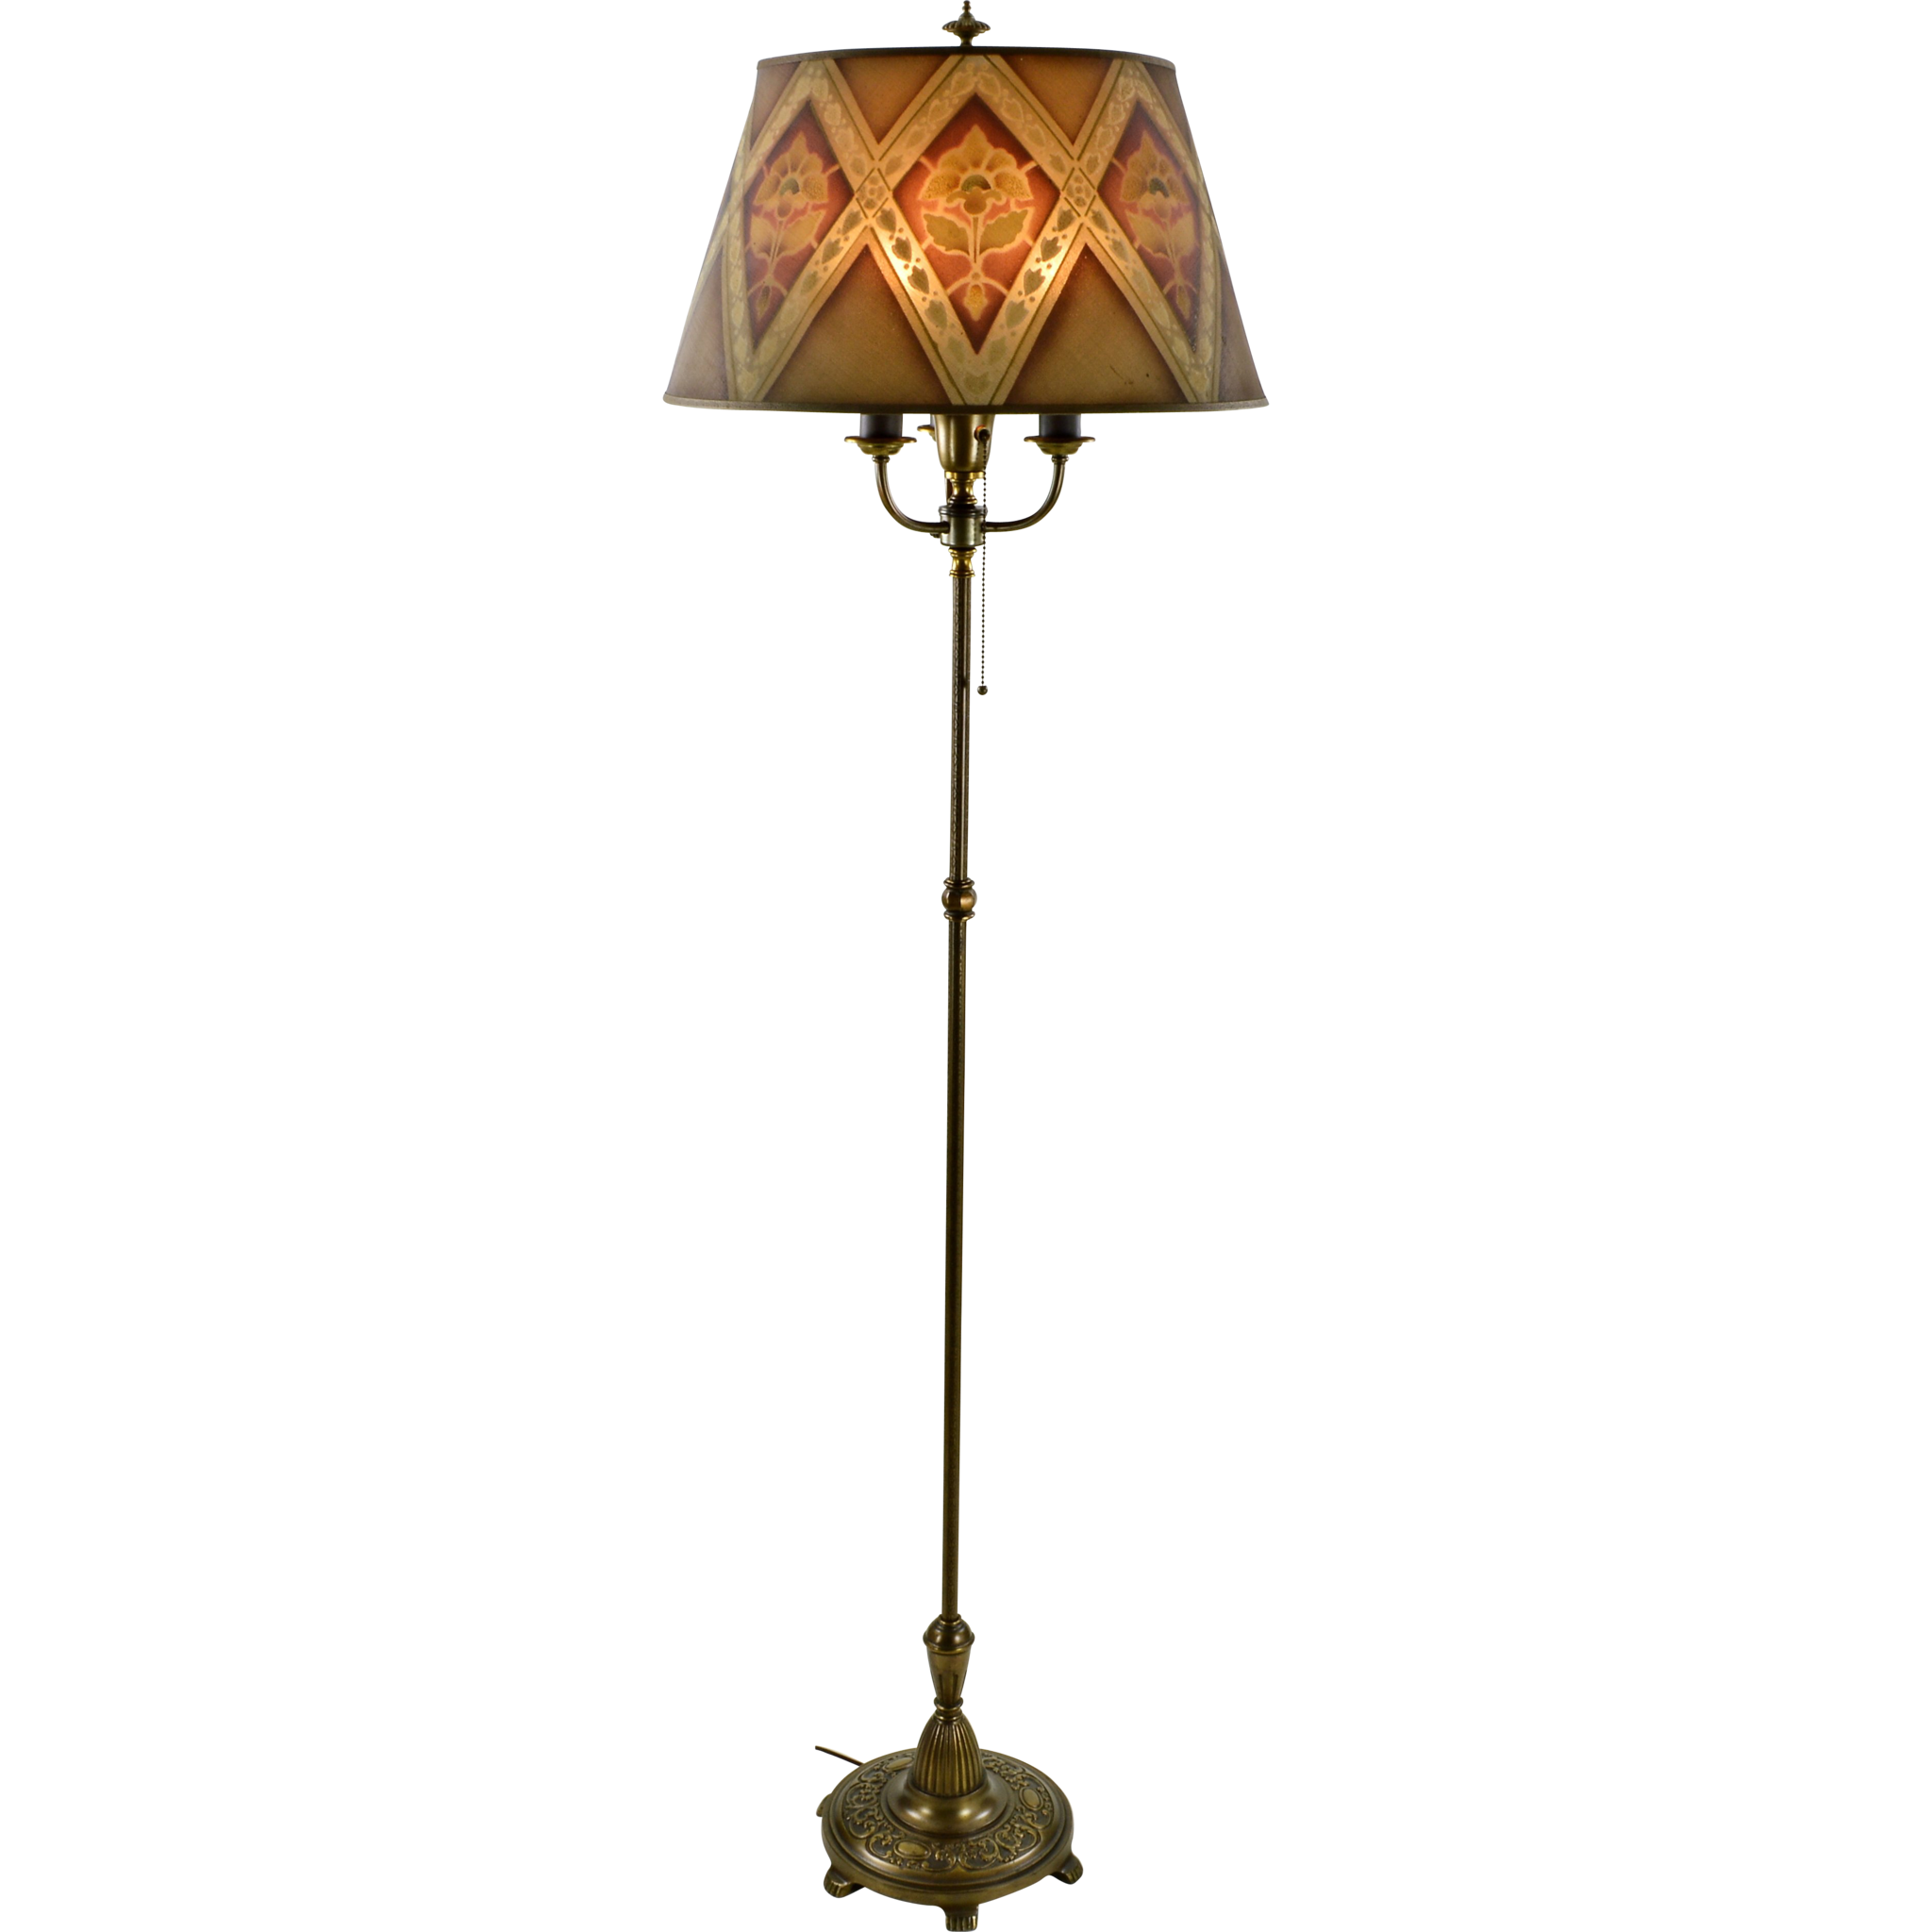 Vintage lamp photo